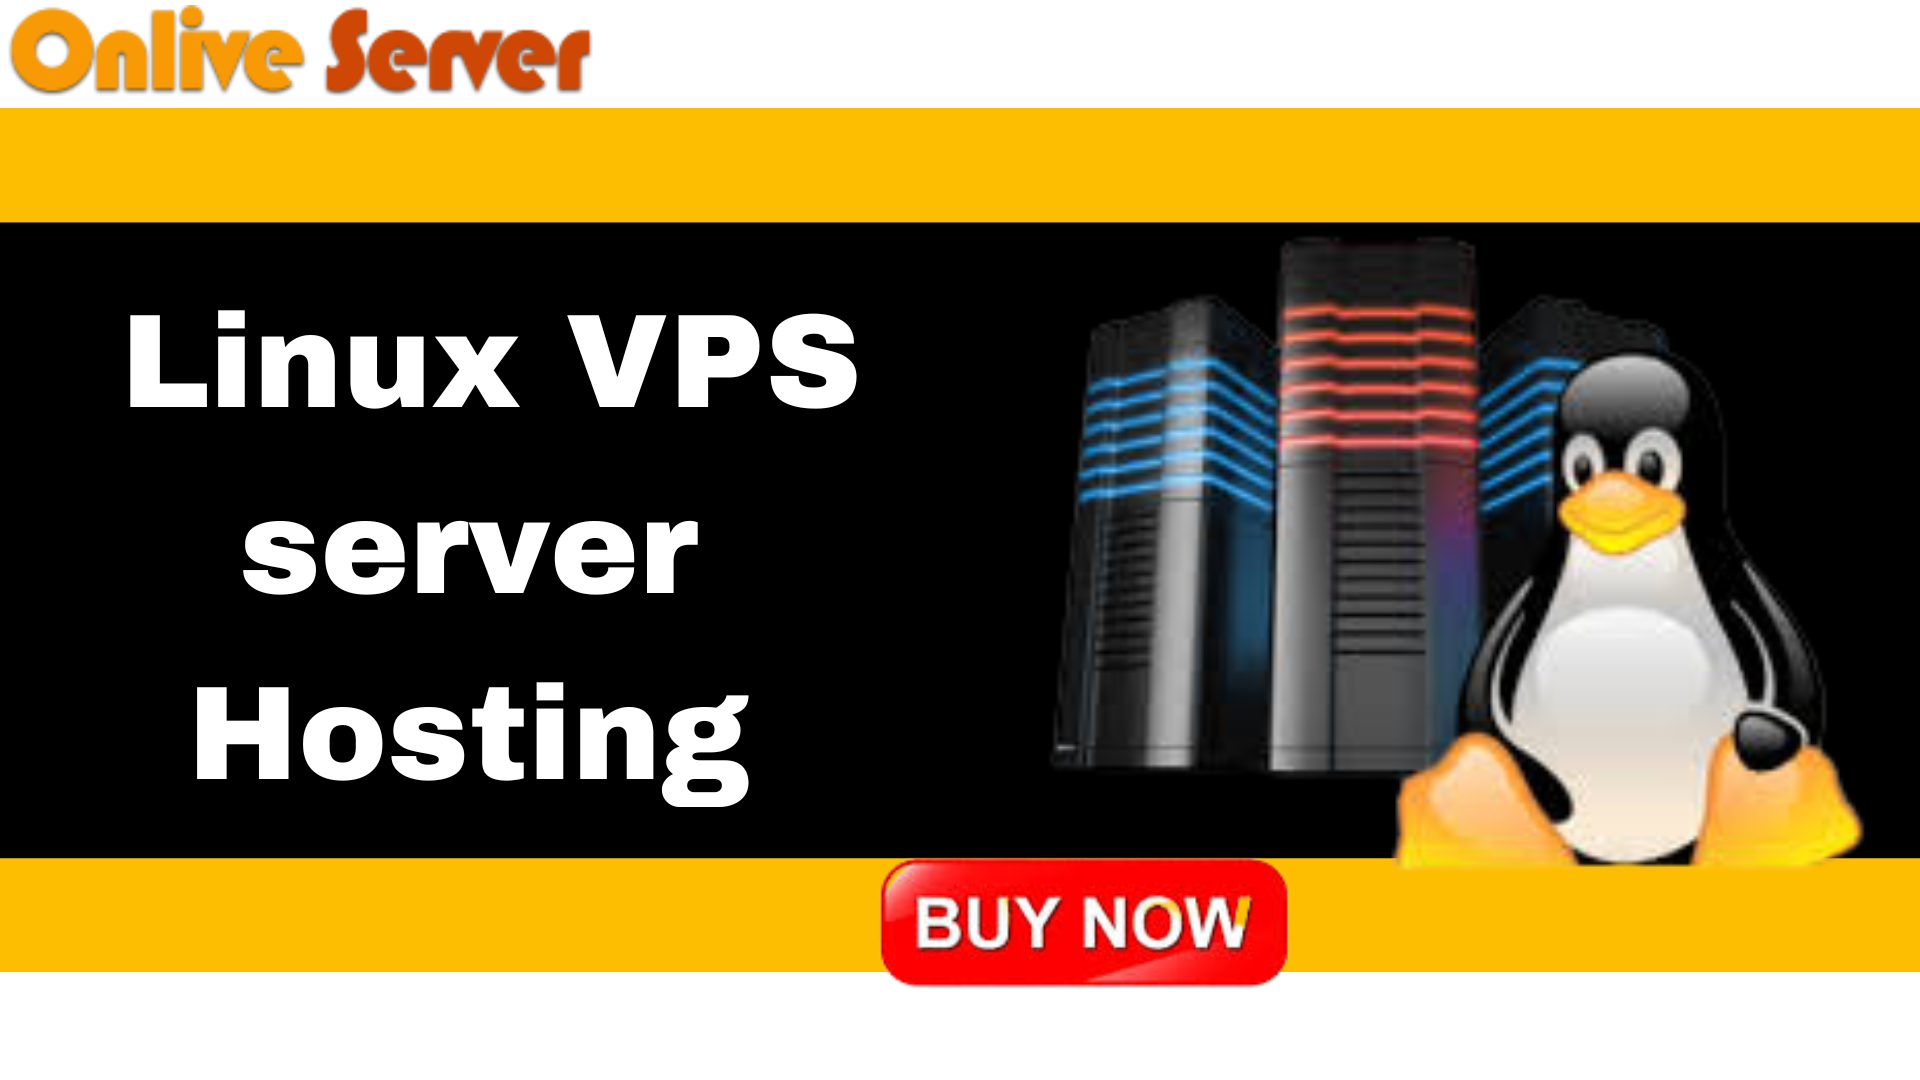 Linux VPS server Hosting